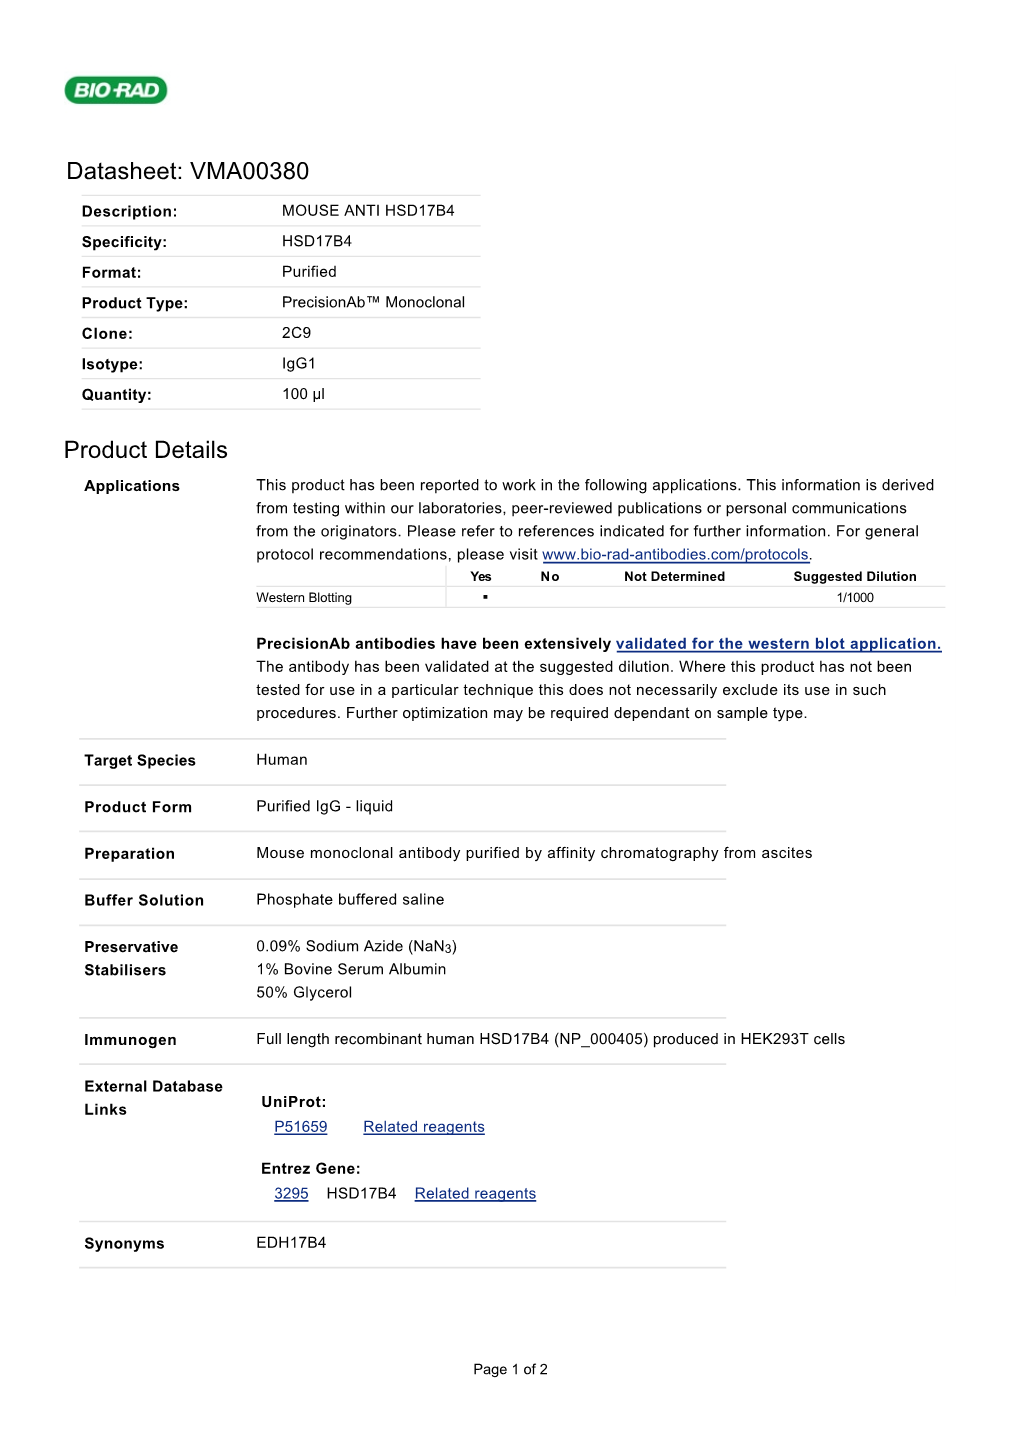 Datasheet: VMA00380 Product Details